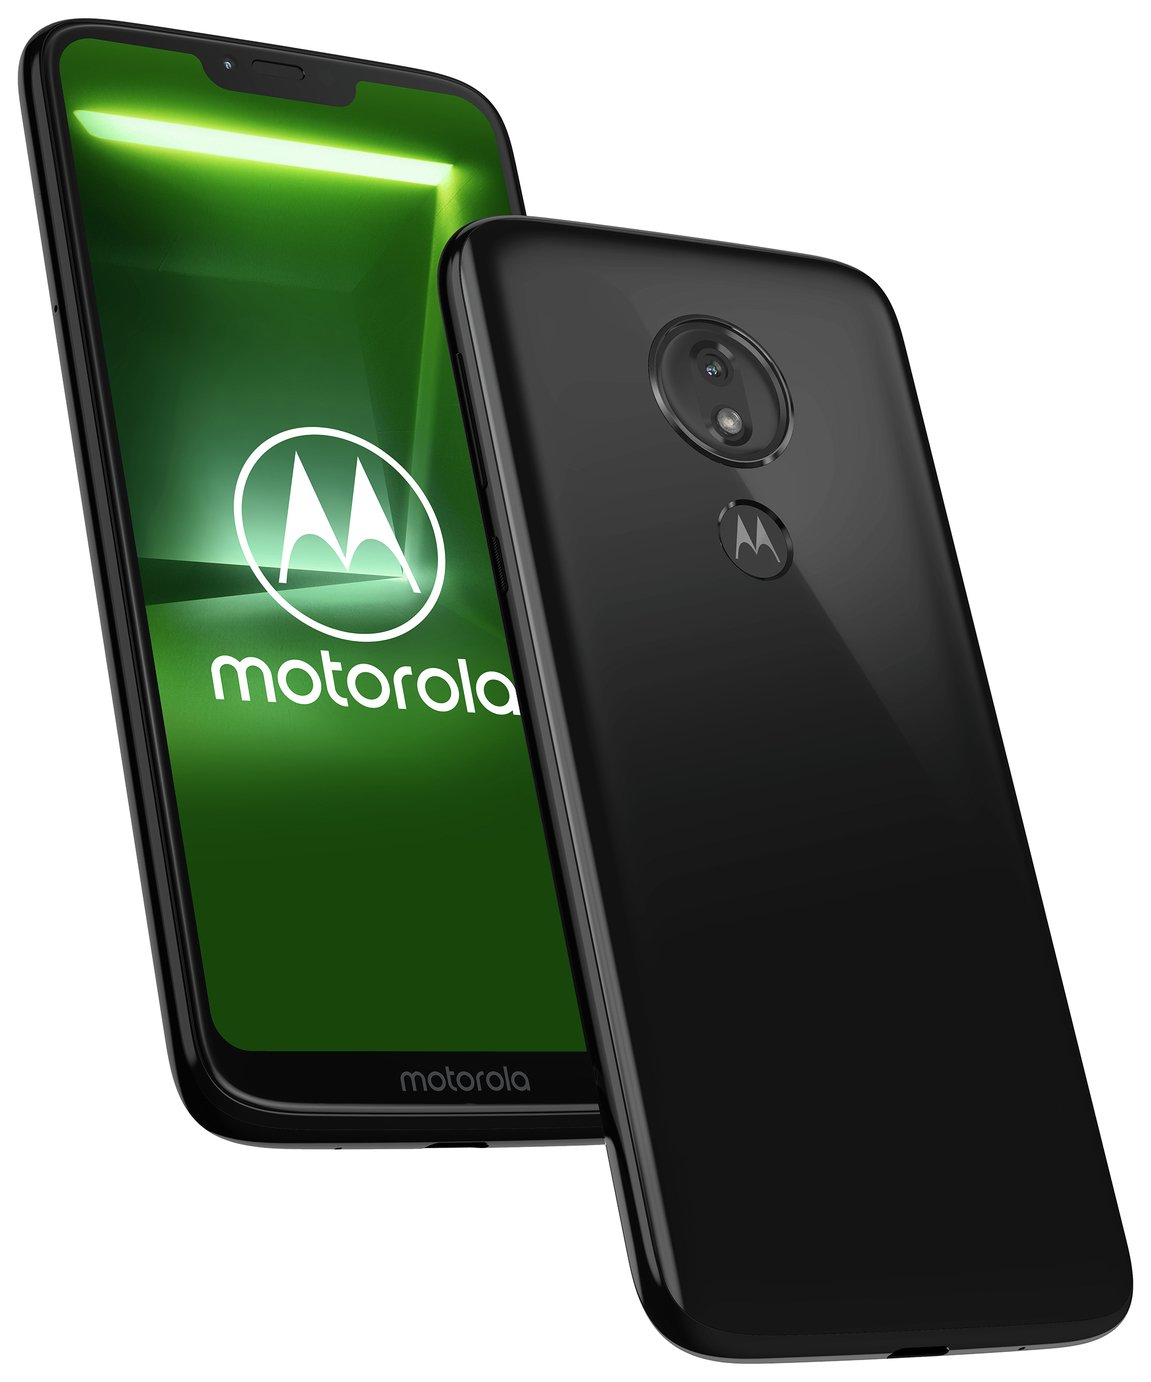 SIM Free Motorola G7 Power 64GB Mobile Phone - Black